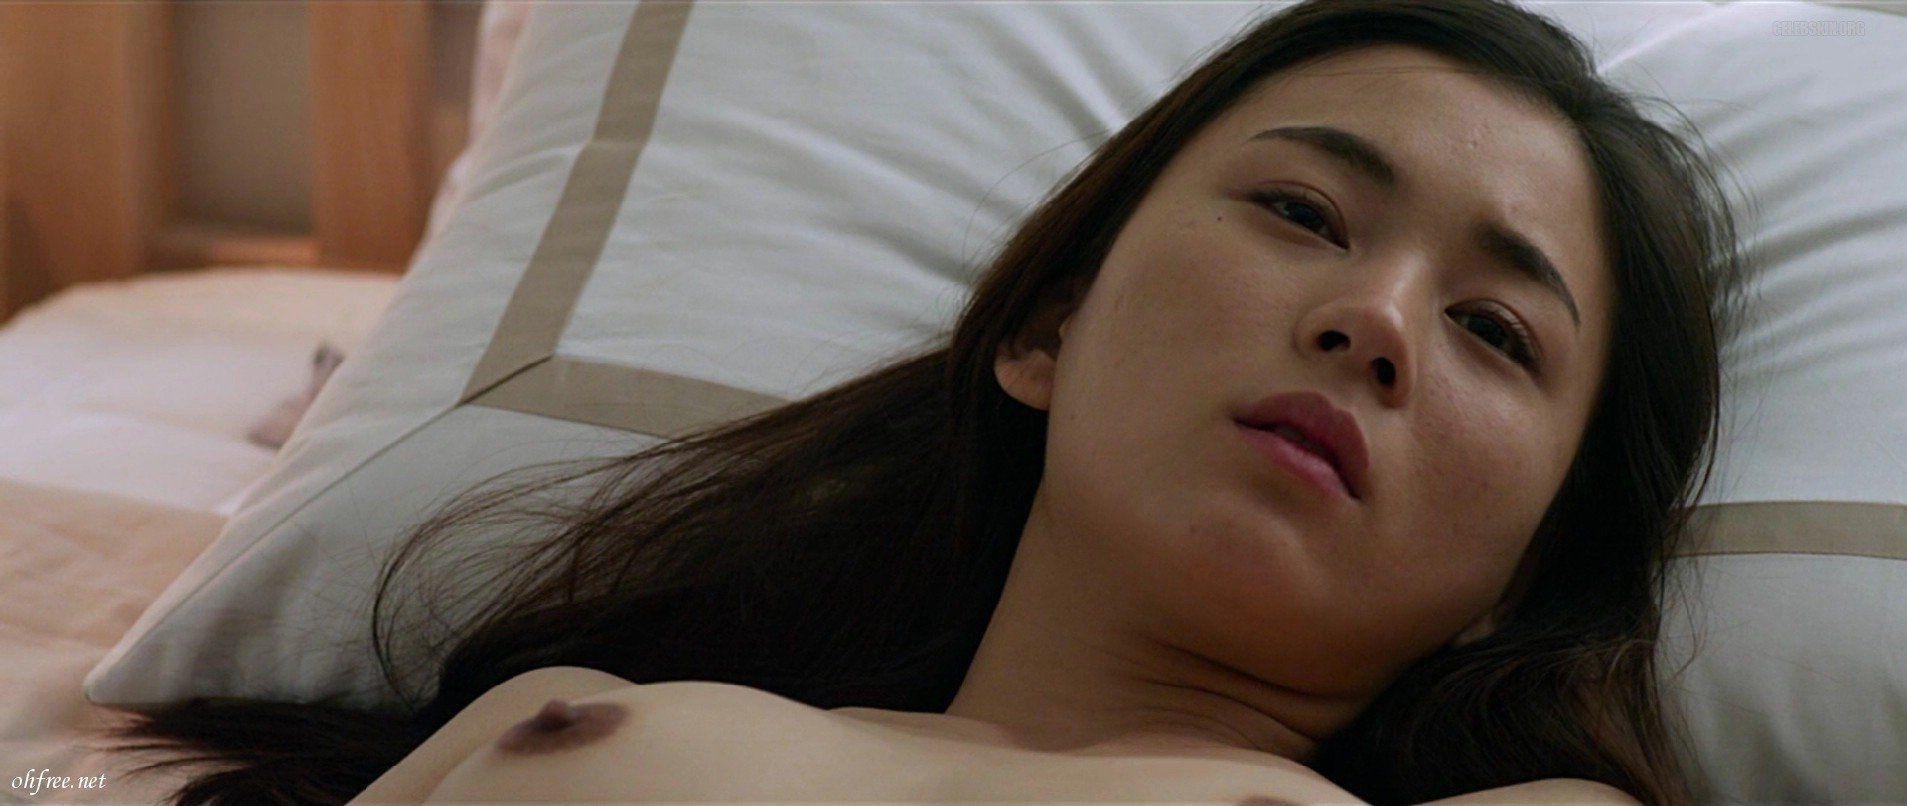 colleen bertrand add korean actress nude scene photo